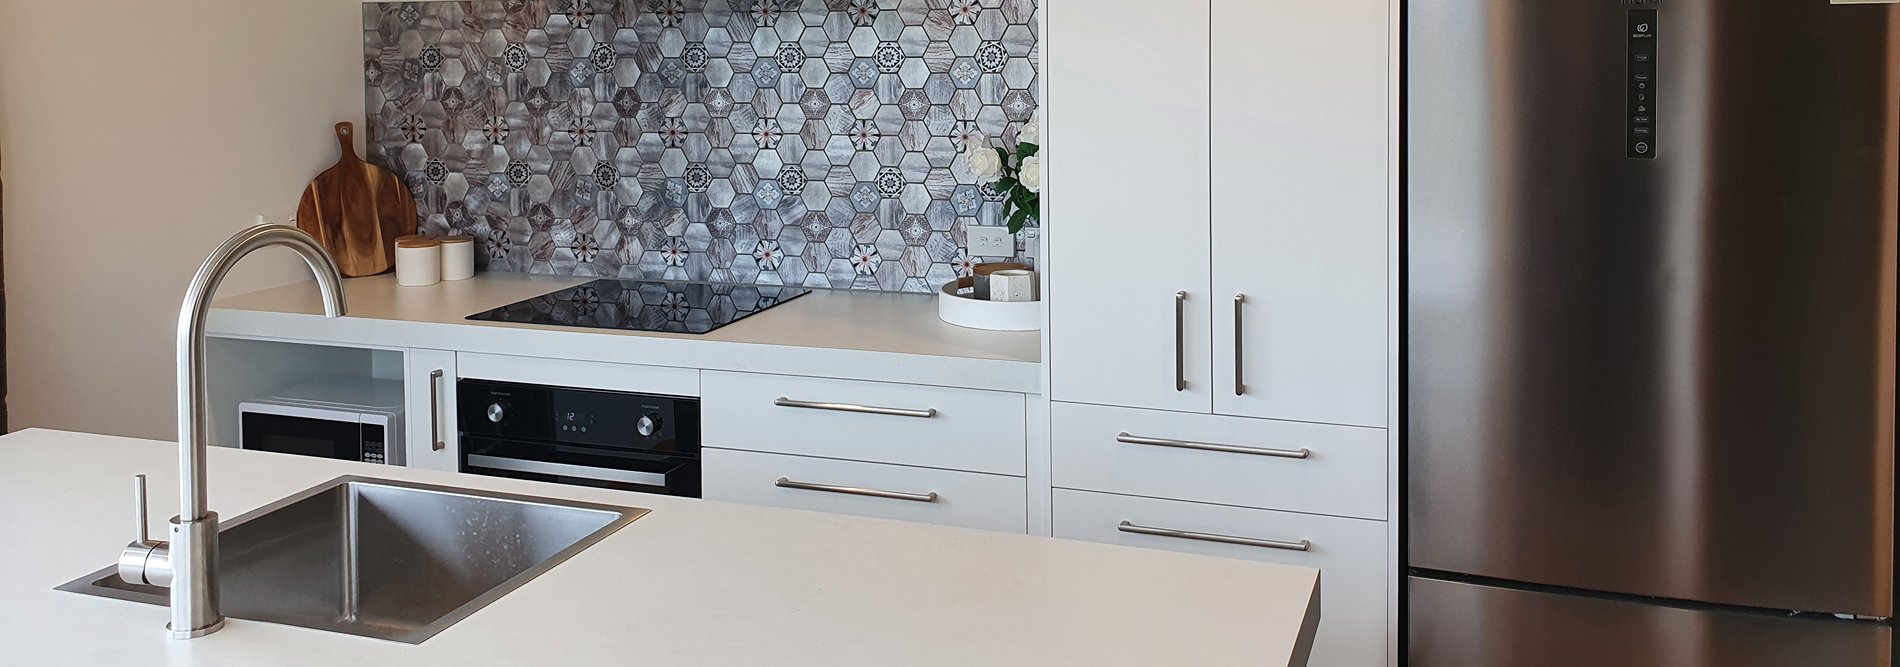 white kitchen with island and vibrant splashback